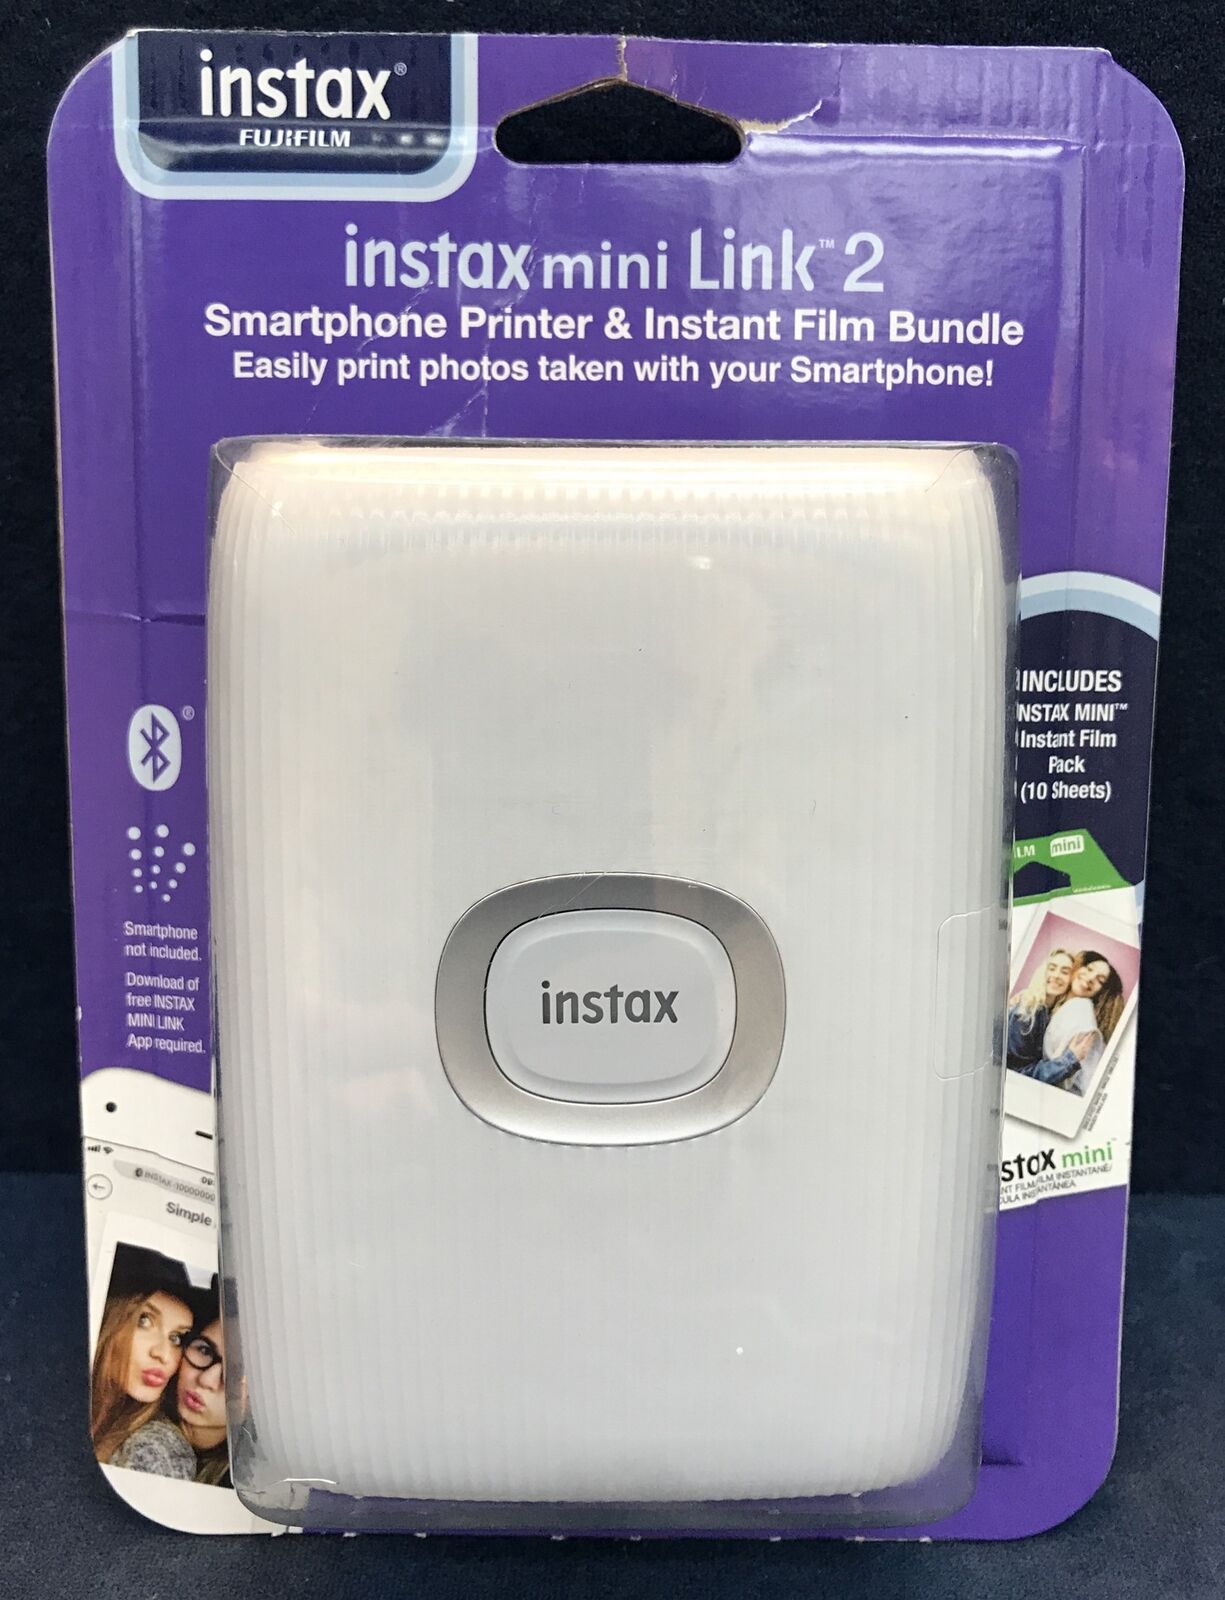 Fujifilm Instax Mini Link 2 - Smartphone Printer Bundle with Instant Film...NEW